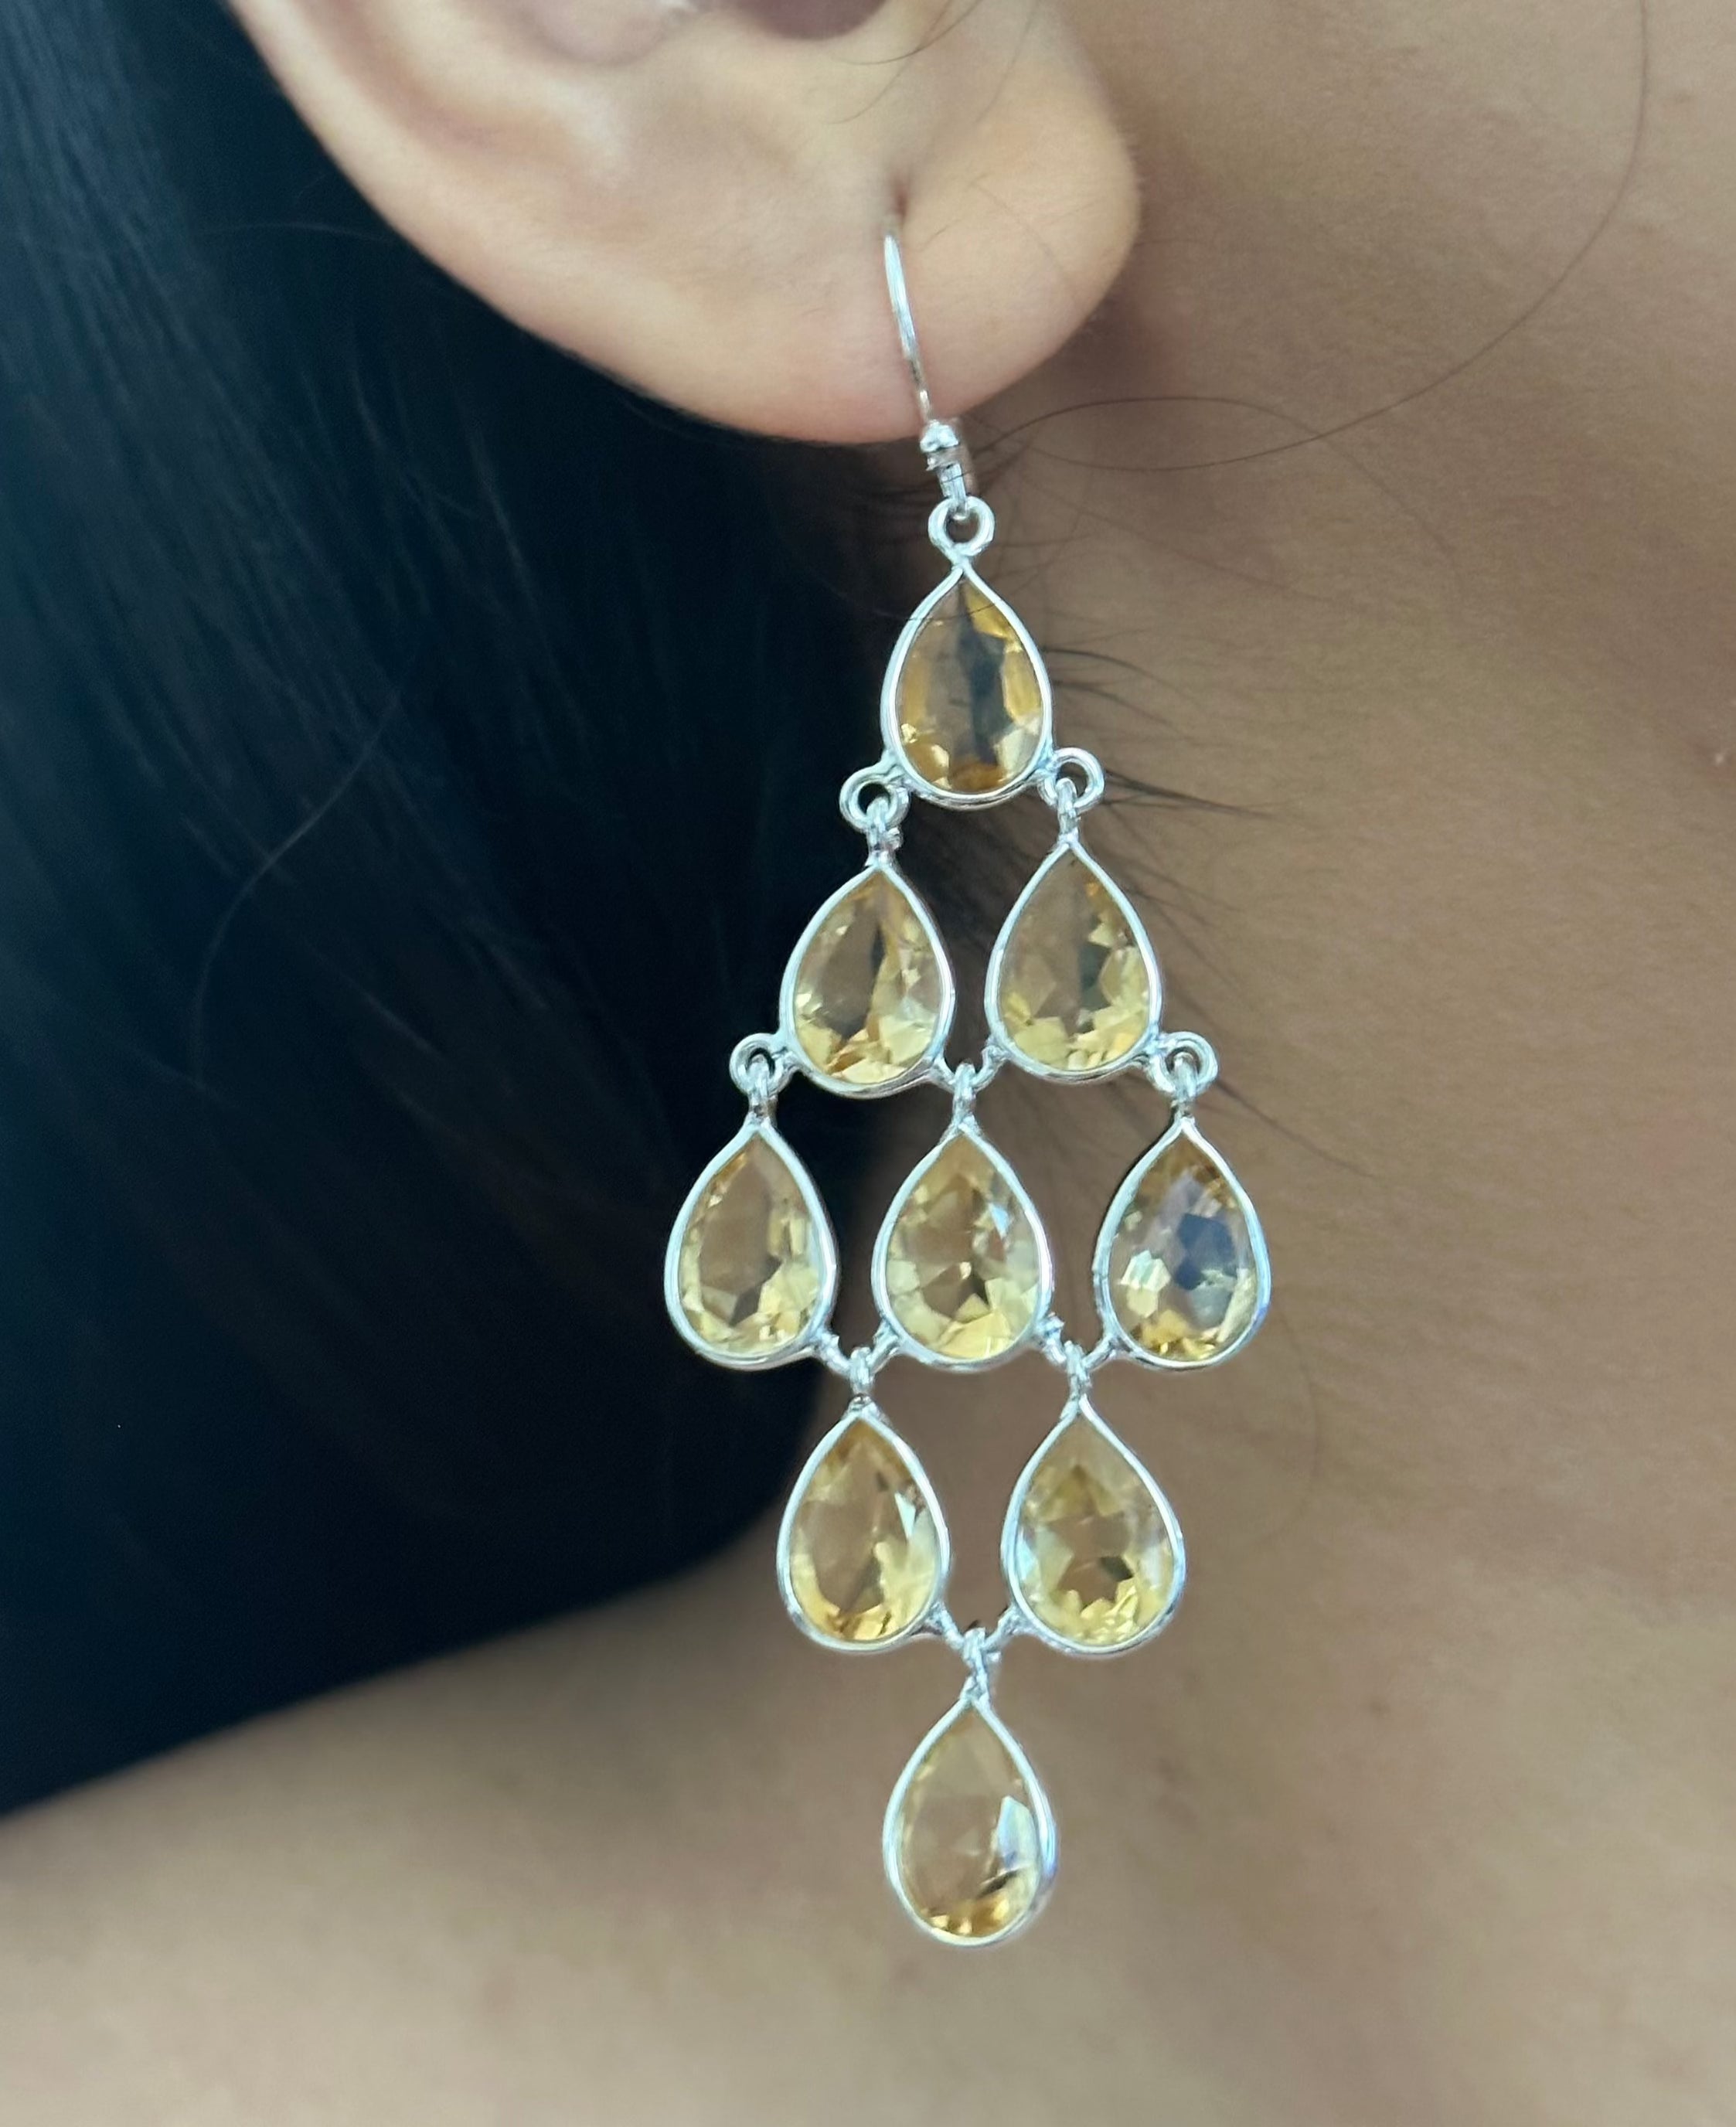 Sterling Silver Chandelier Earrings with Natural Gemstones - Citrine